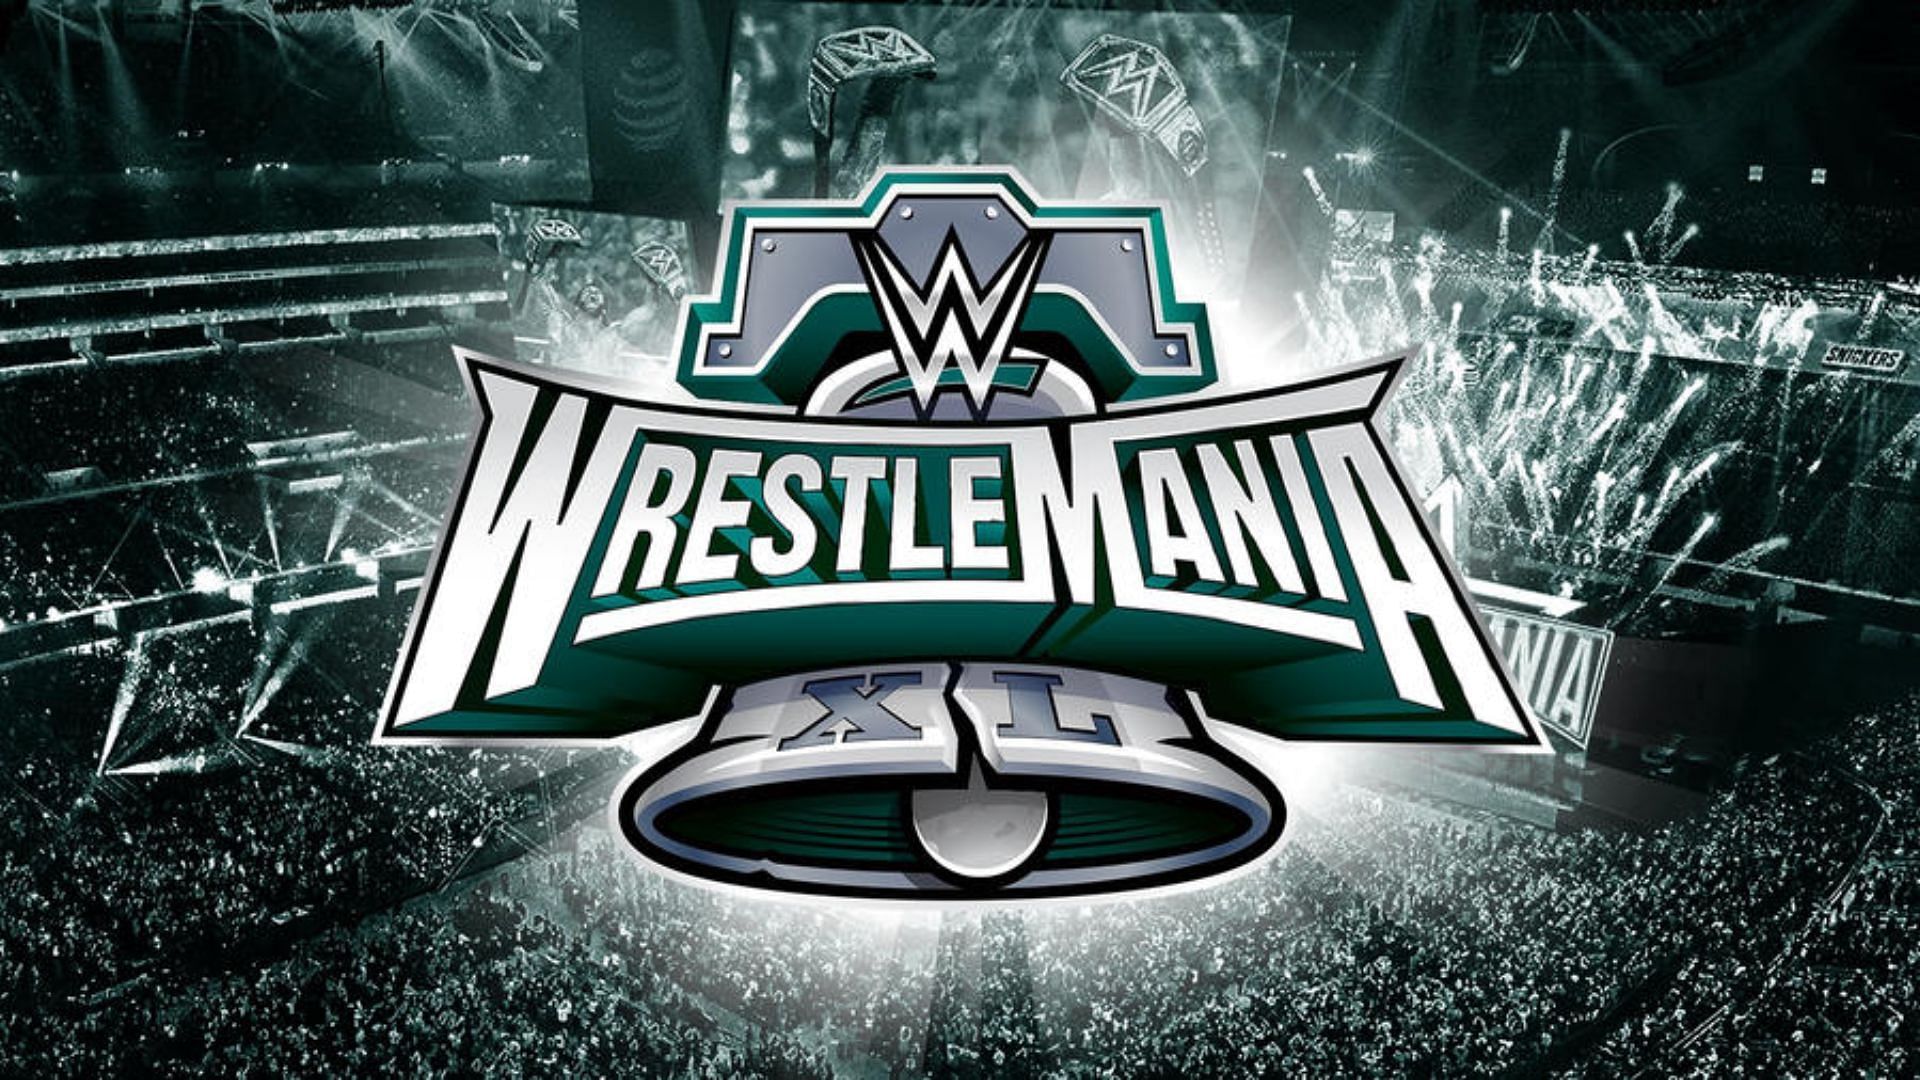 WrestleMania XL will be held in Philadelphia, Pennsylvania